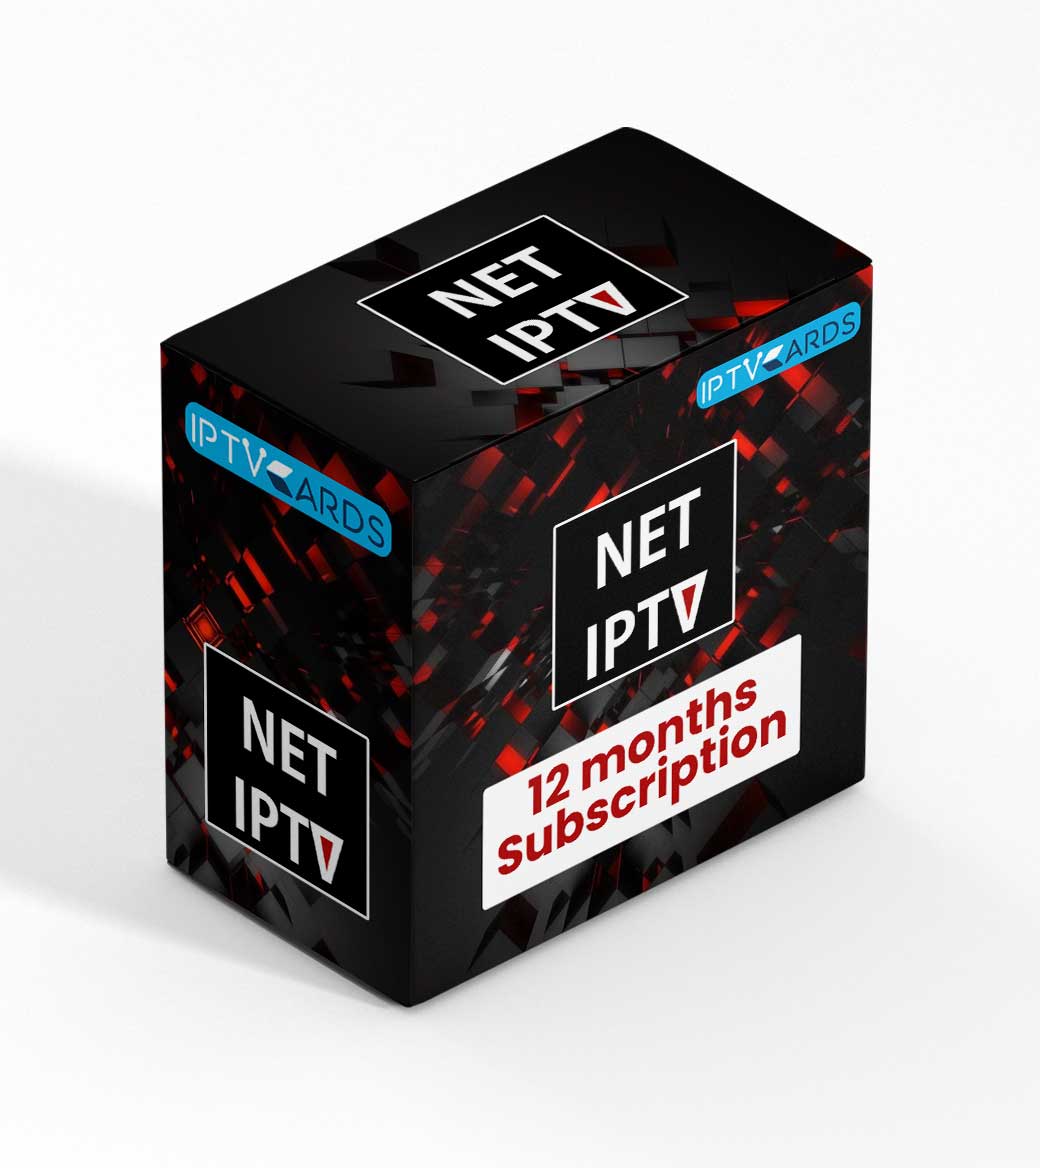 NET IPTV subscription